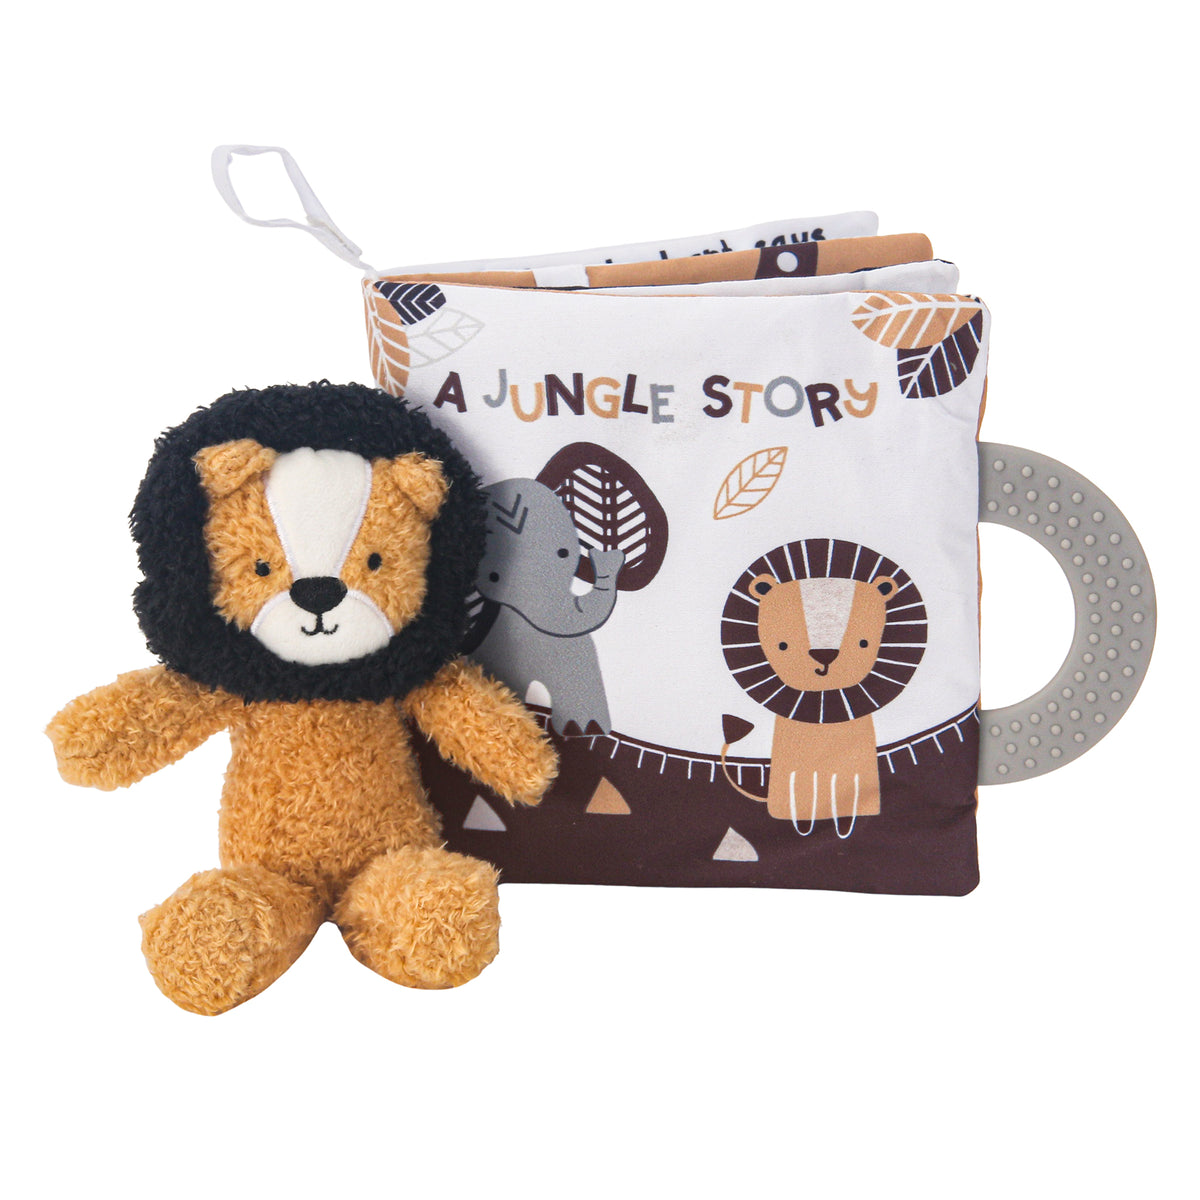 Jungle Story Developmental Soft Book & Lion Plush Toy Gift Set